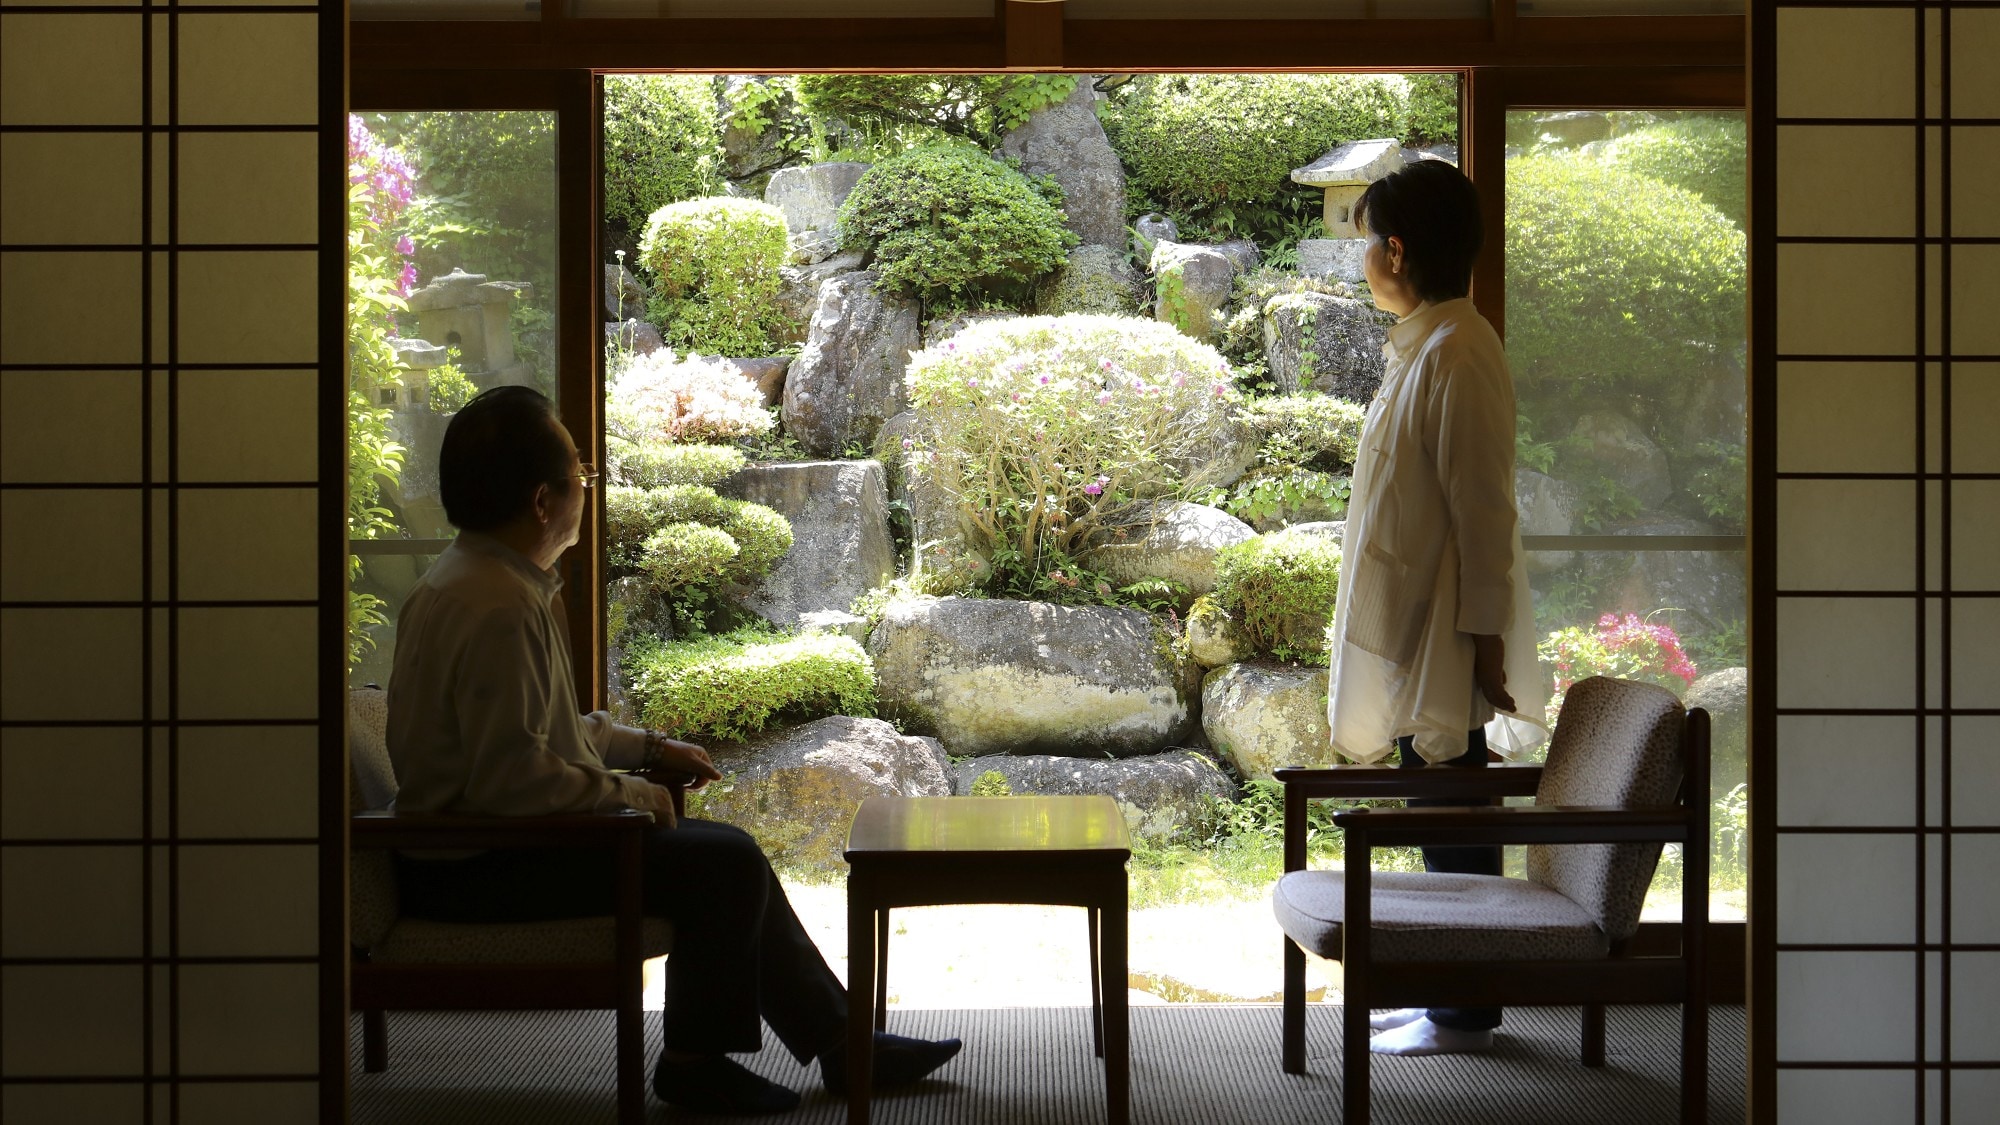 Silakan habiskan waktu bersantai di kamar murni bergaya Jepang di mana angin sepoi-sepoi alami bertiup.